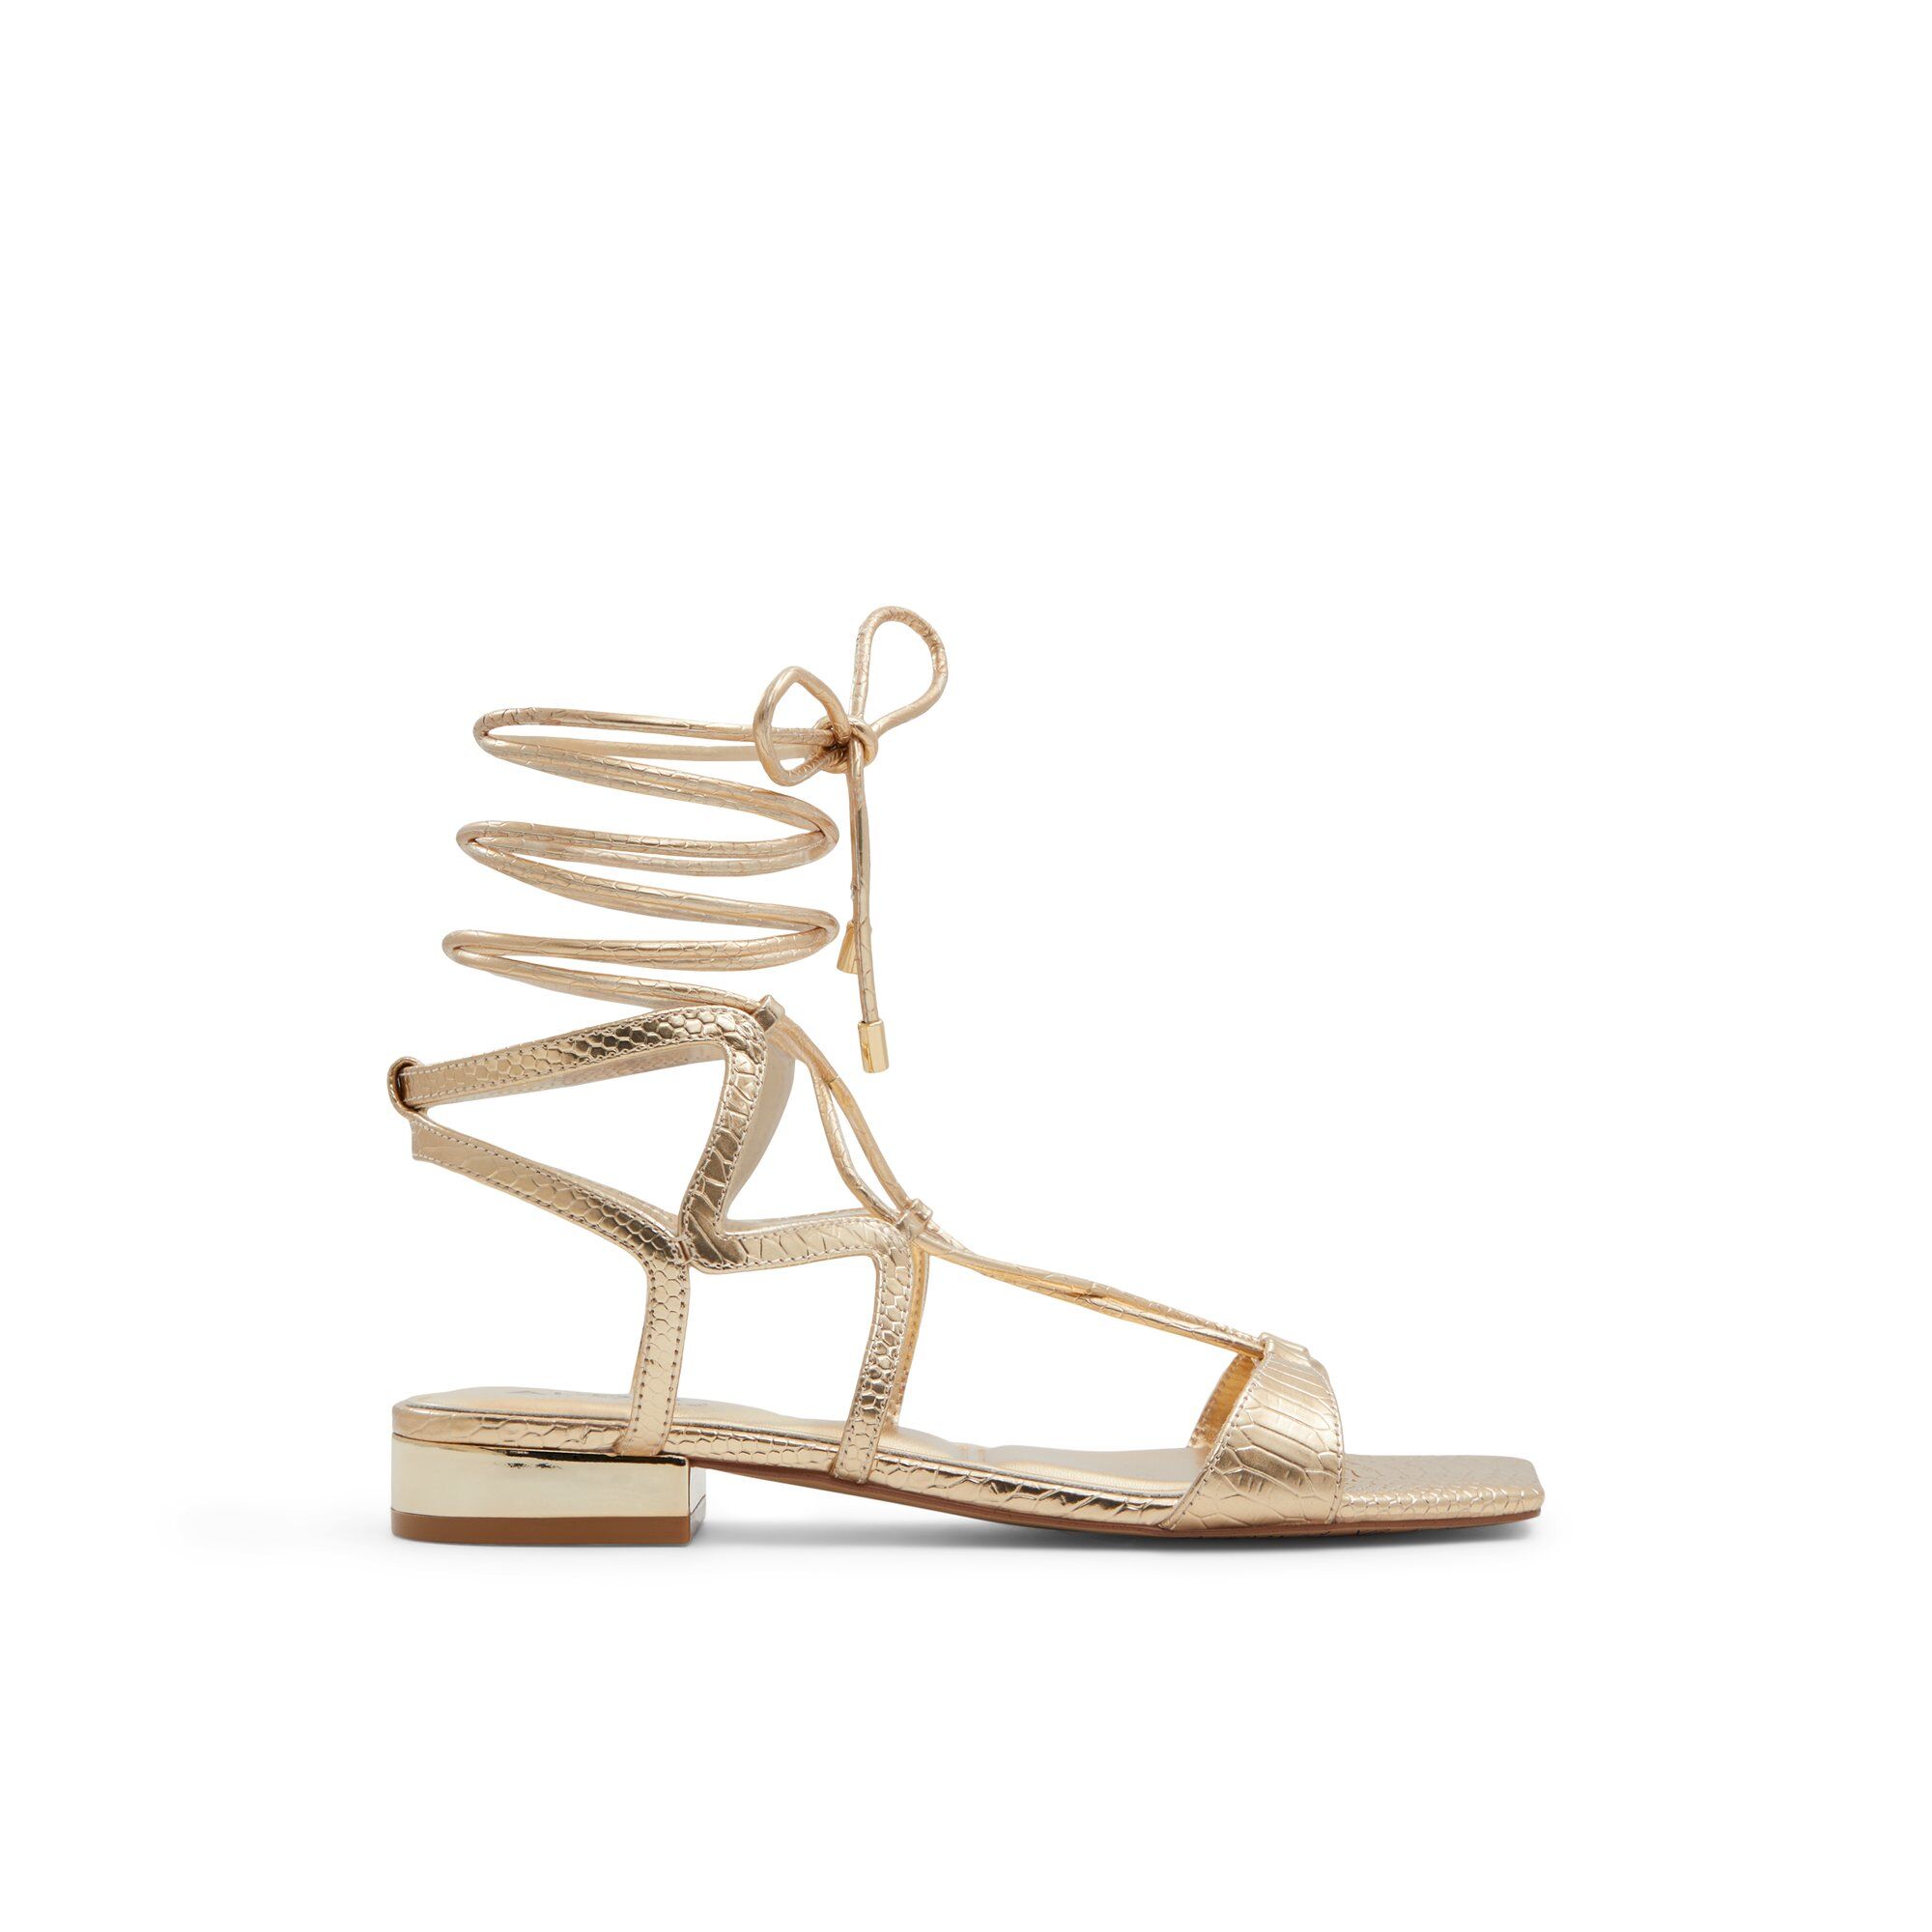 ALDO Breezy - Women's Flat Sandals - Gold, Size 7